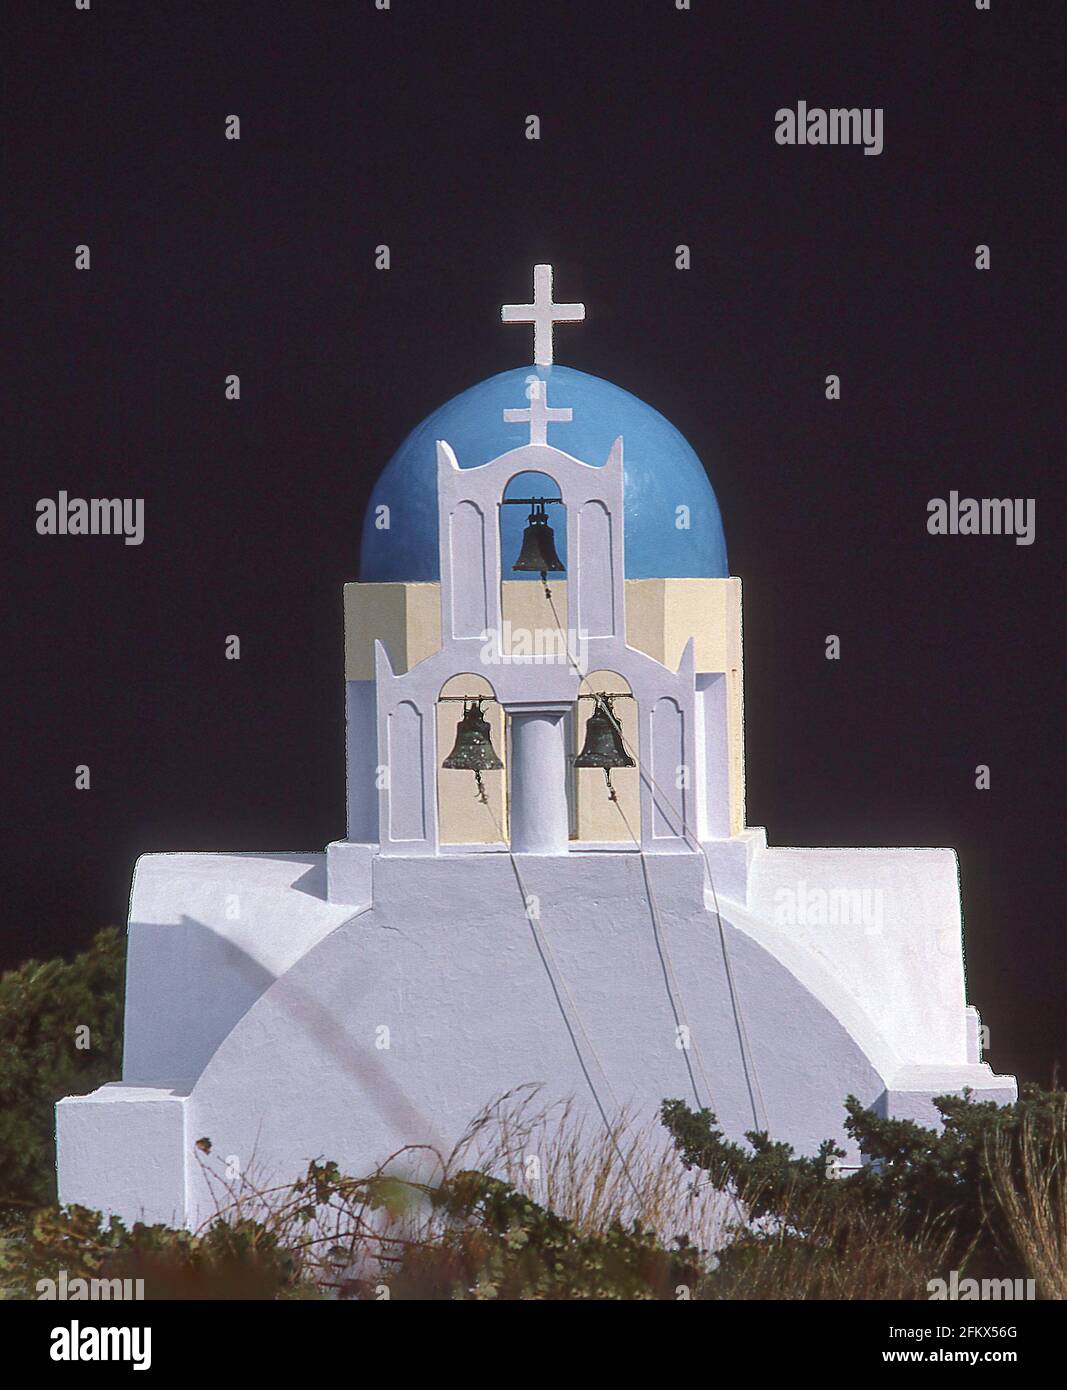 Sonnenbeleuchtete Kirche mit dunklen Sturmwolken dahinter, Fira, Santorini, die Kykladen, Südägäis, Griechenland Stockfoto